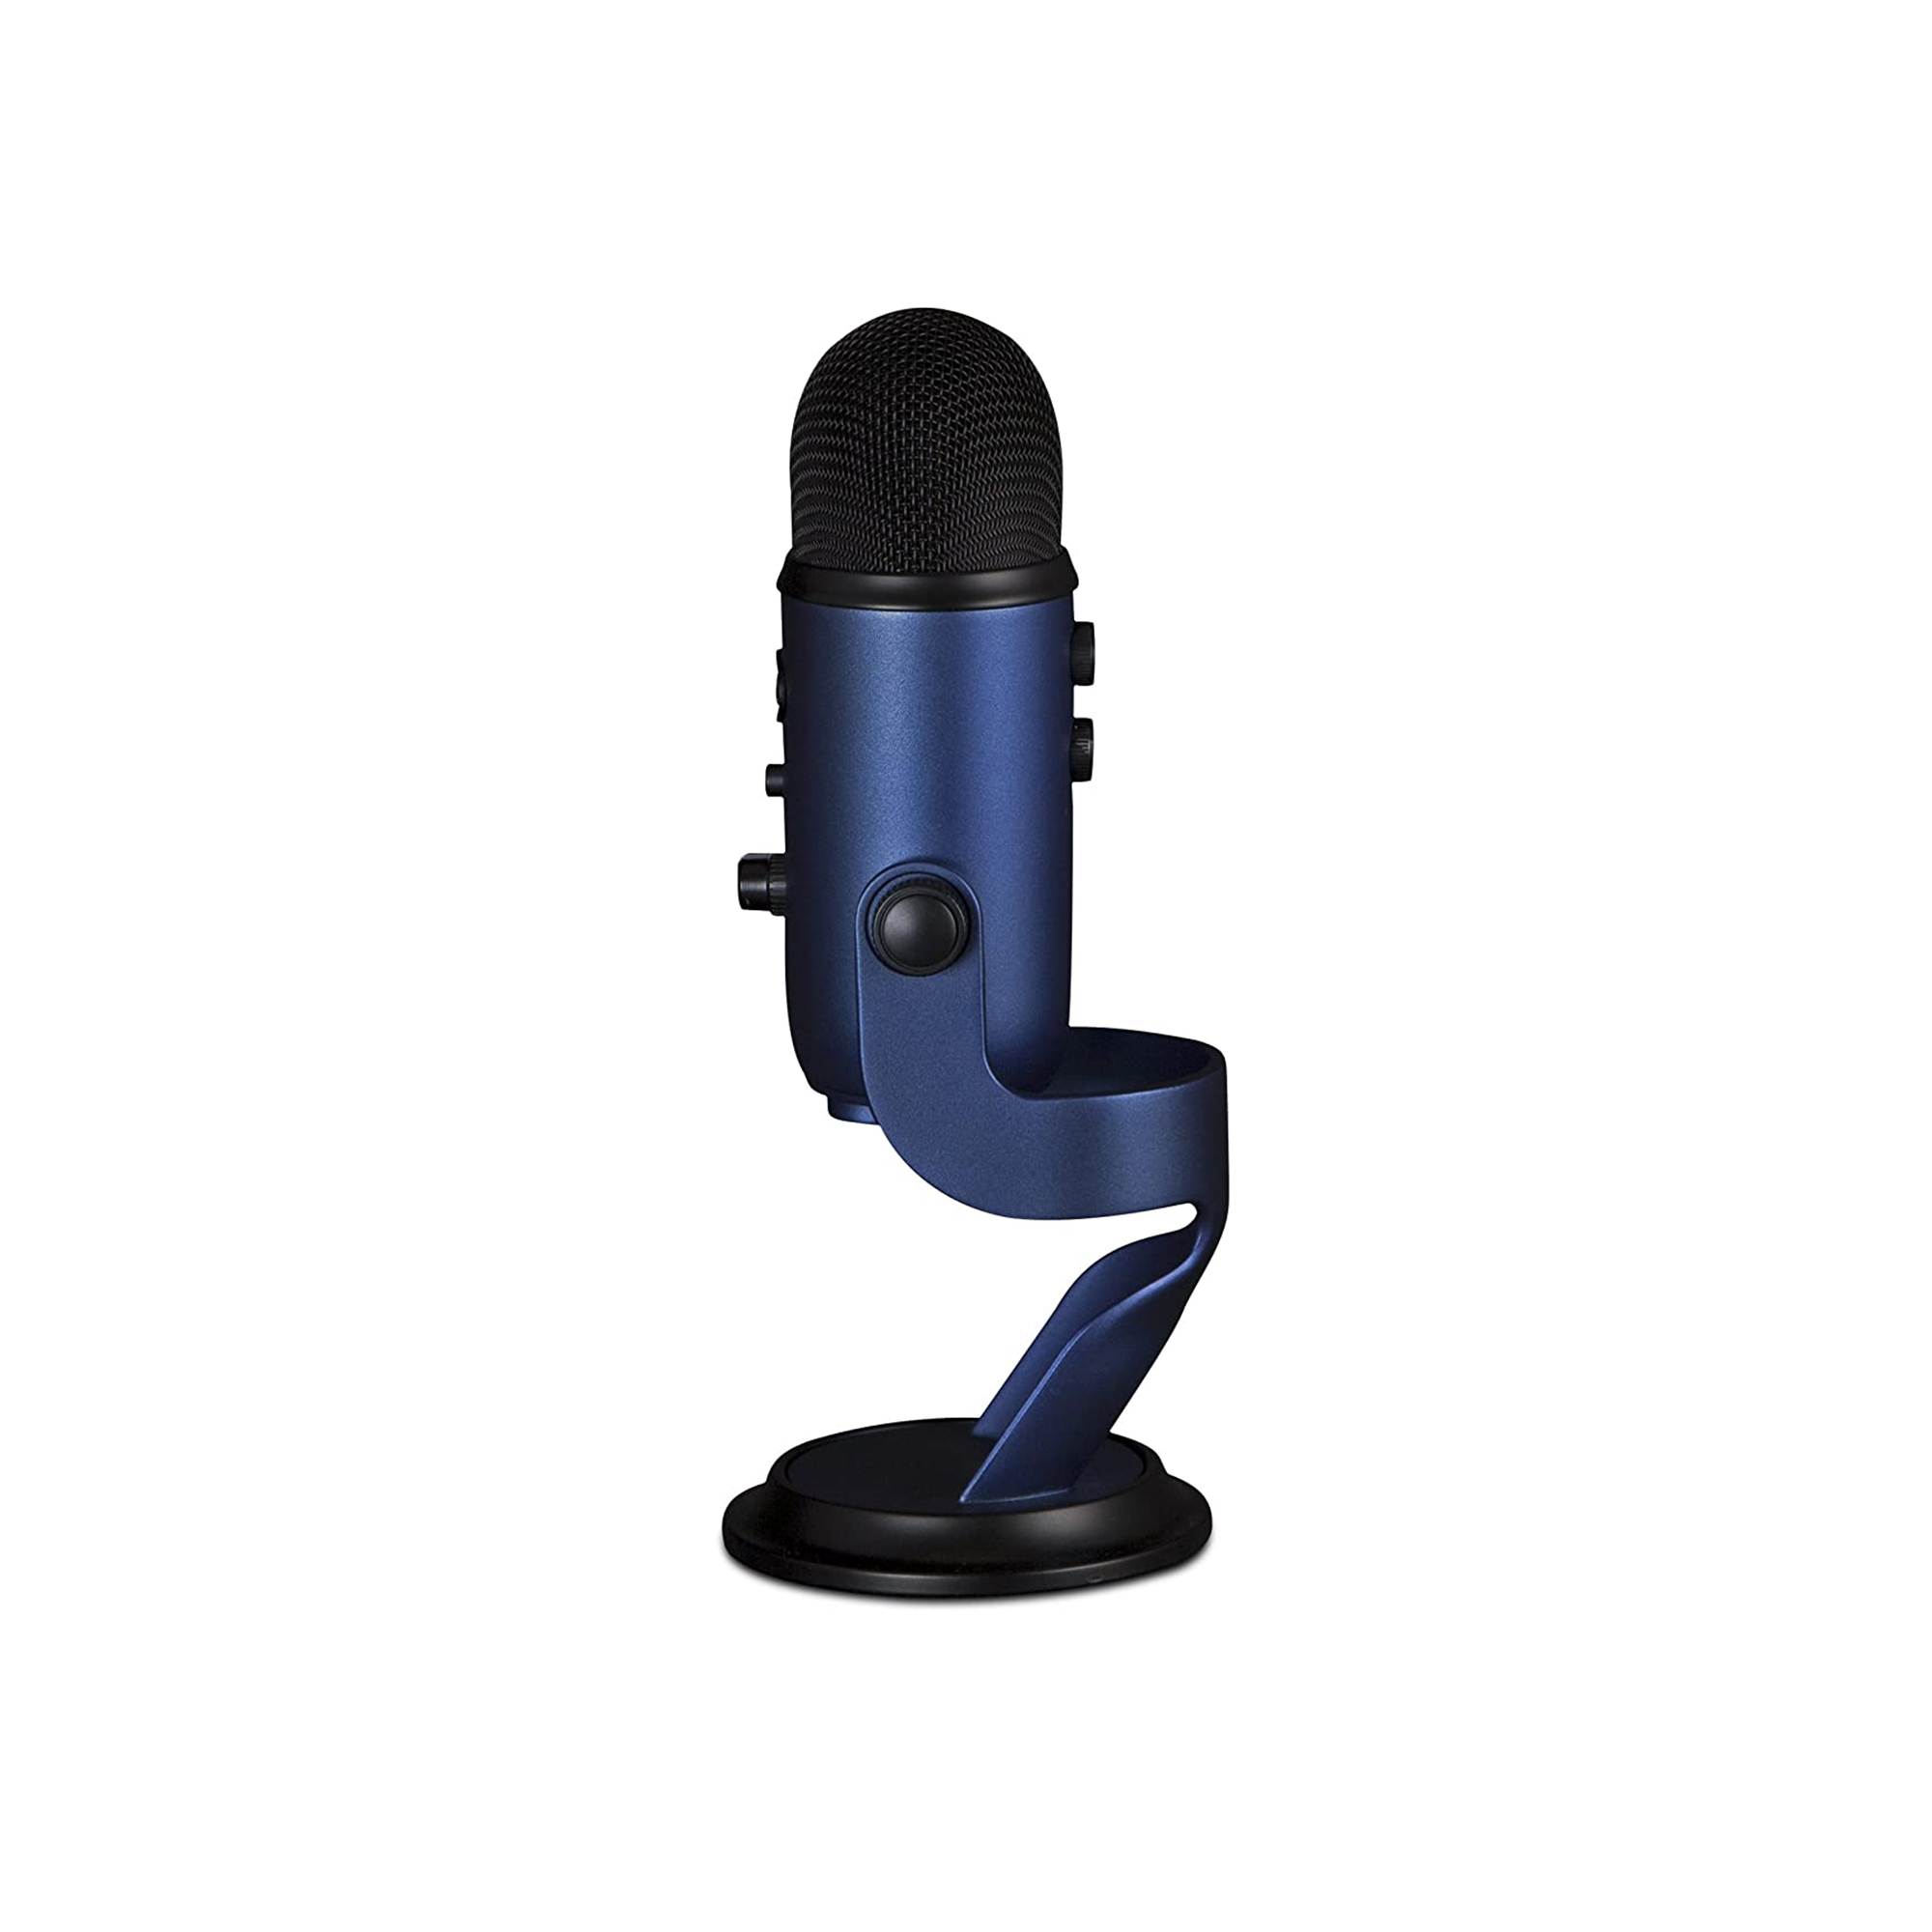 Yeti X Professional Multi-Pattern USB Microphone with Blue VO!CE